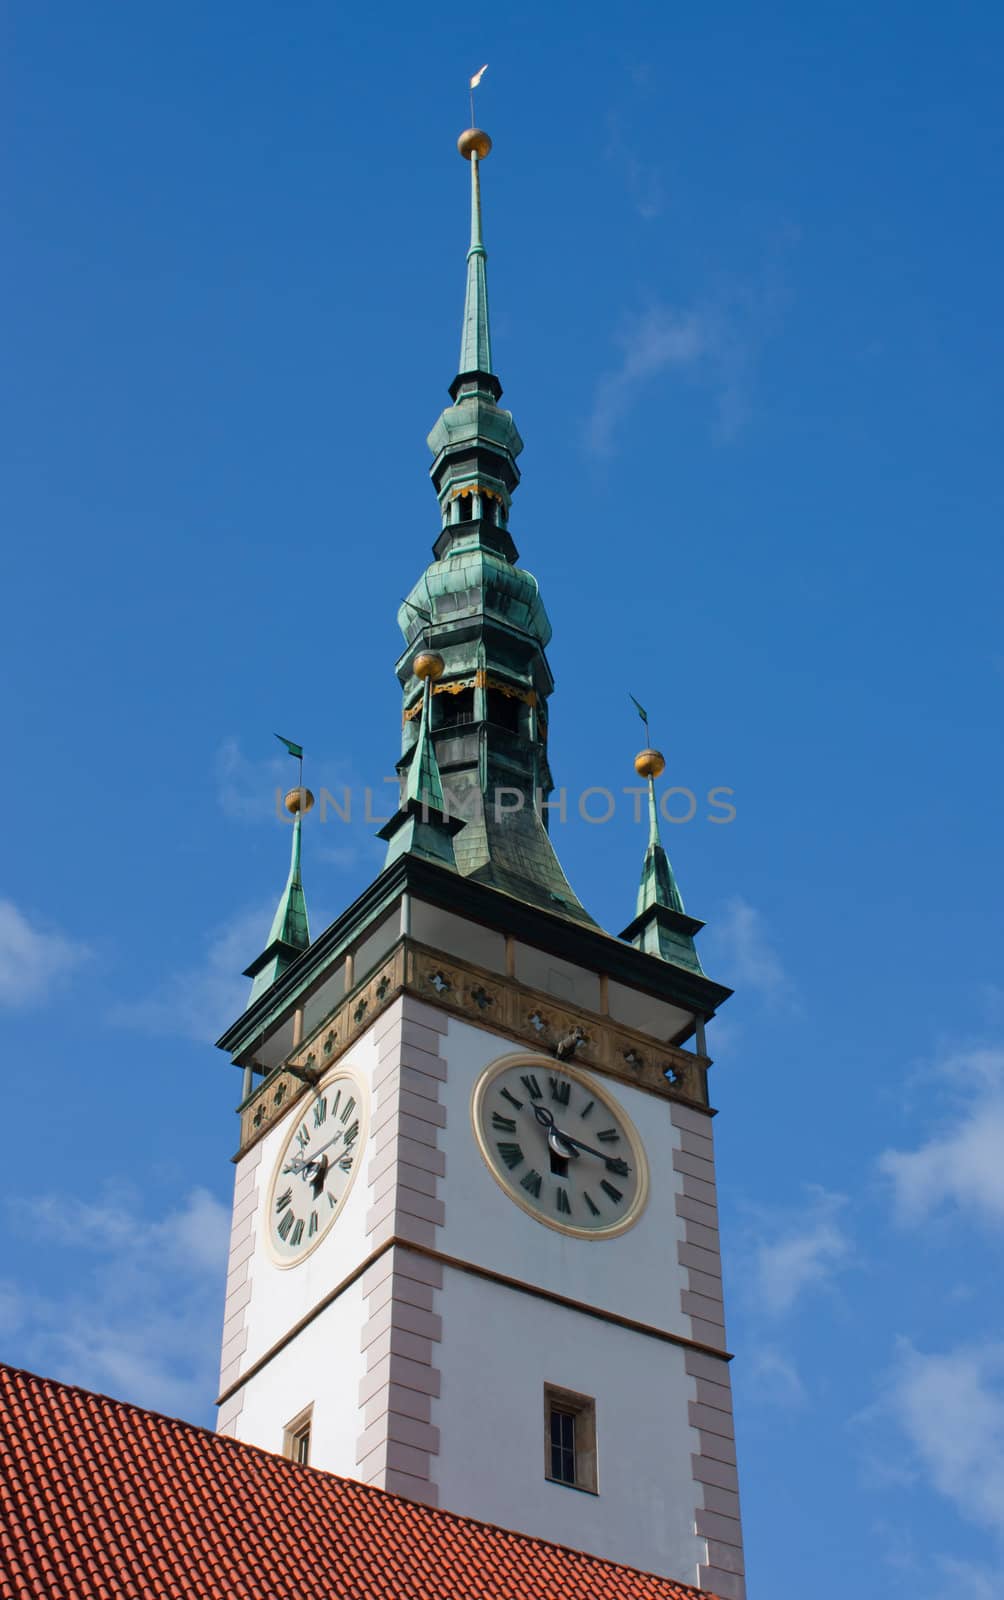 Belfry of the town hall of Olomouc - Czech Republic






Belfry